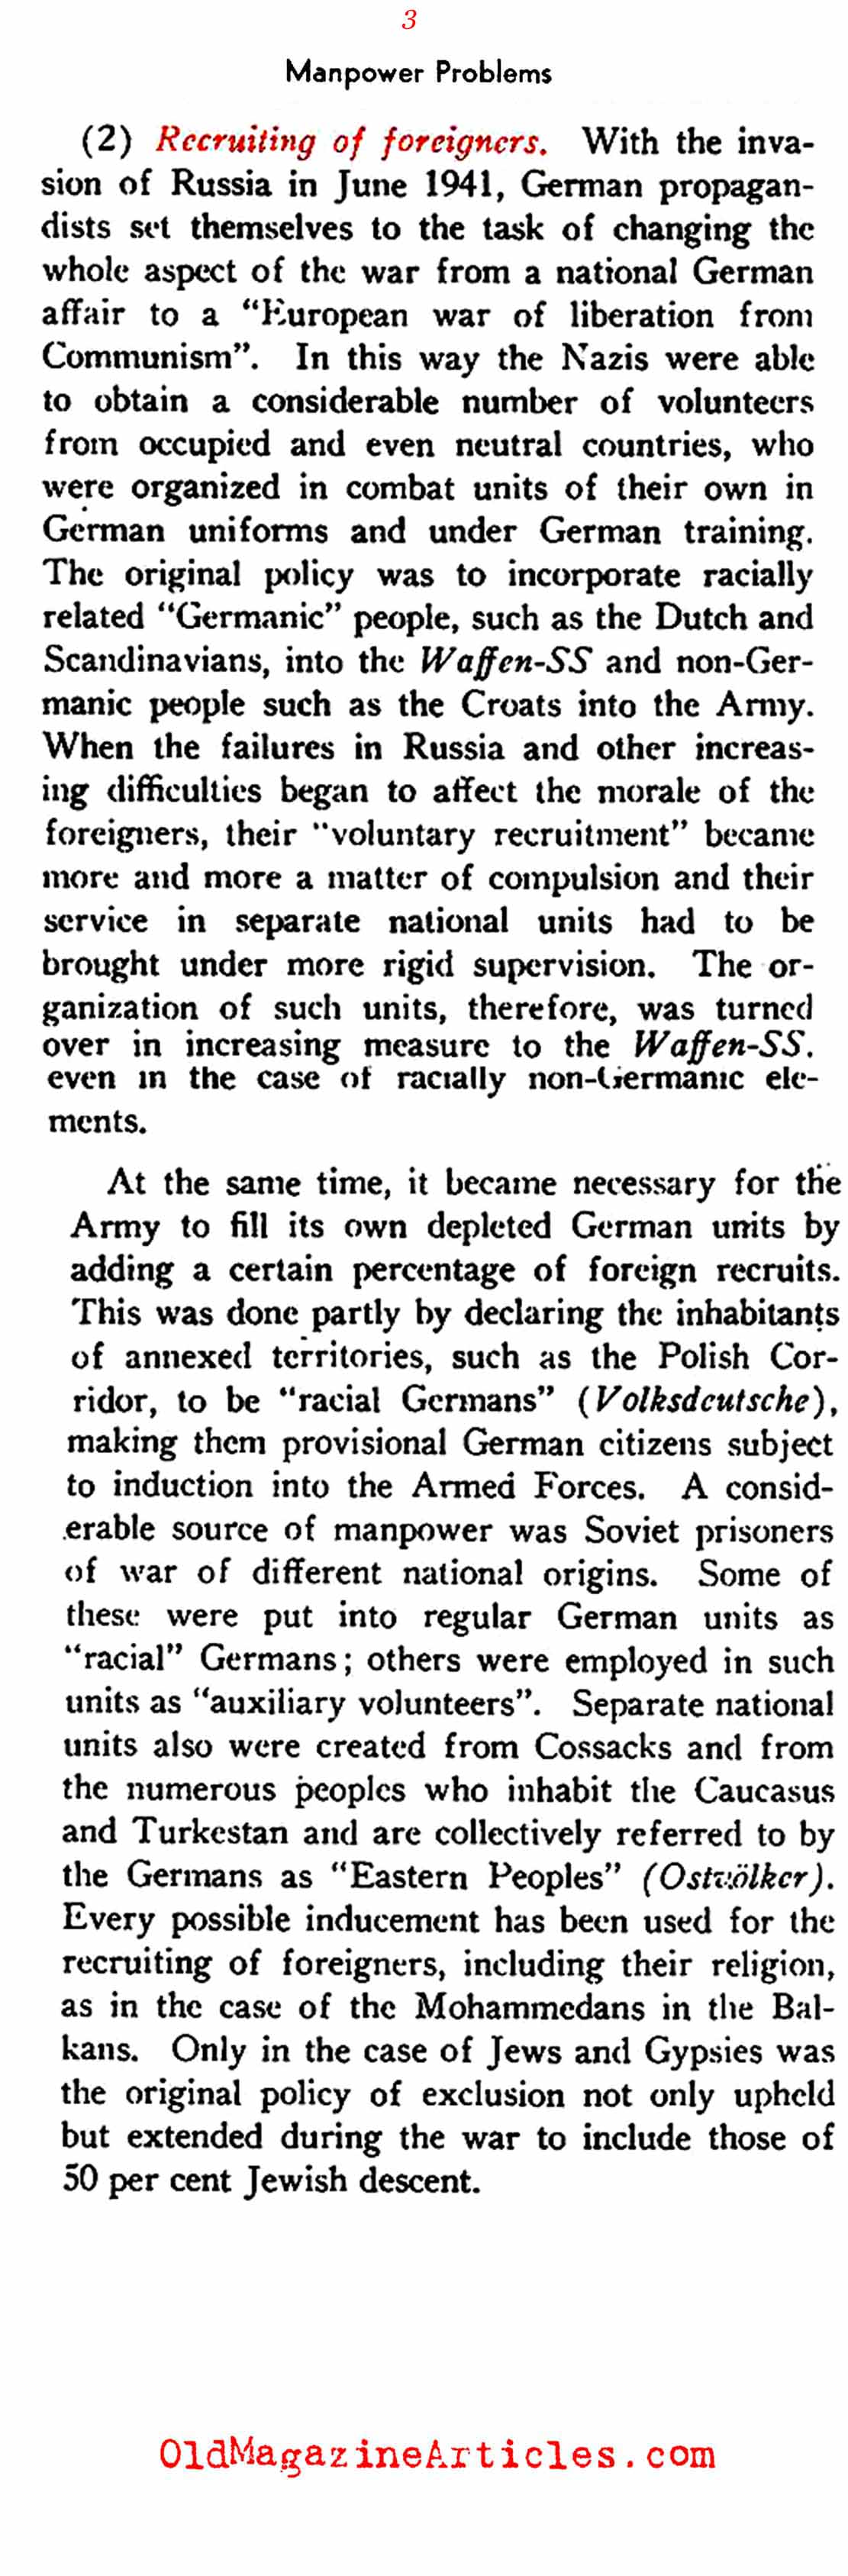 The German Draft and Manpower Supply  (U.S. Dept. of War, 1945)